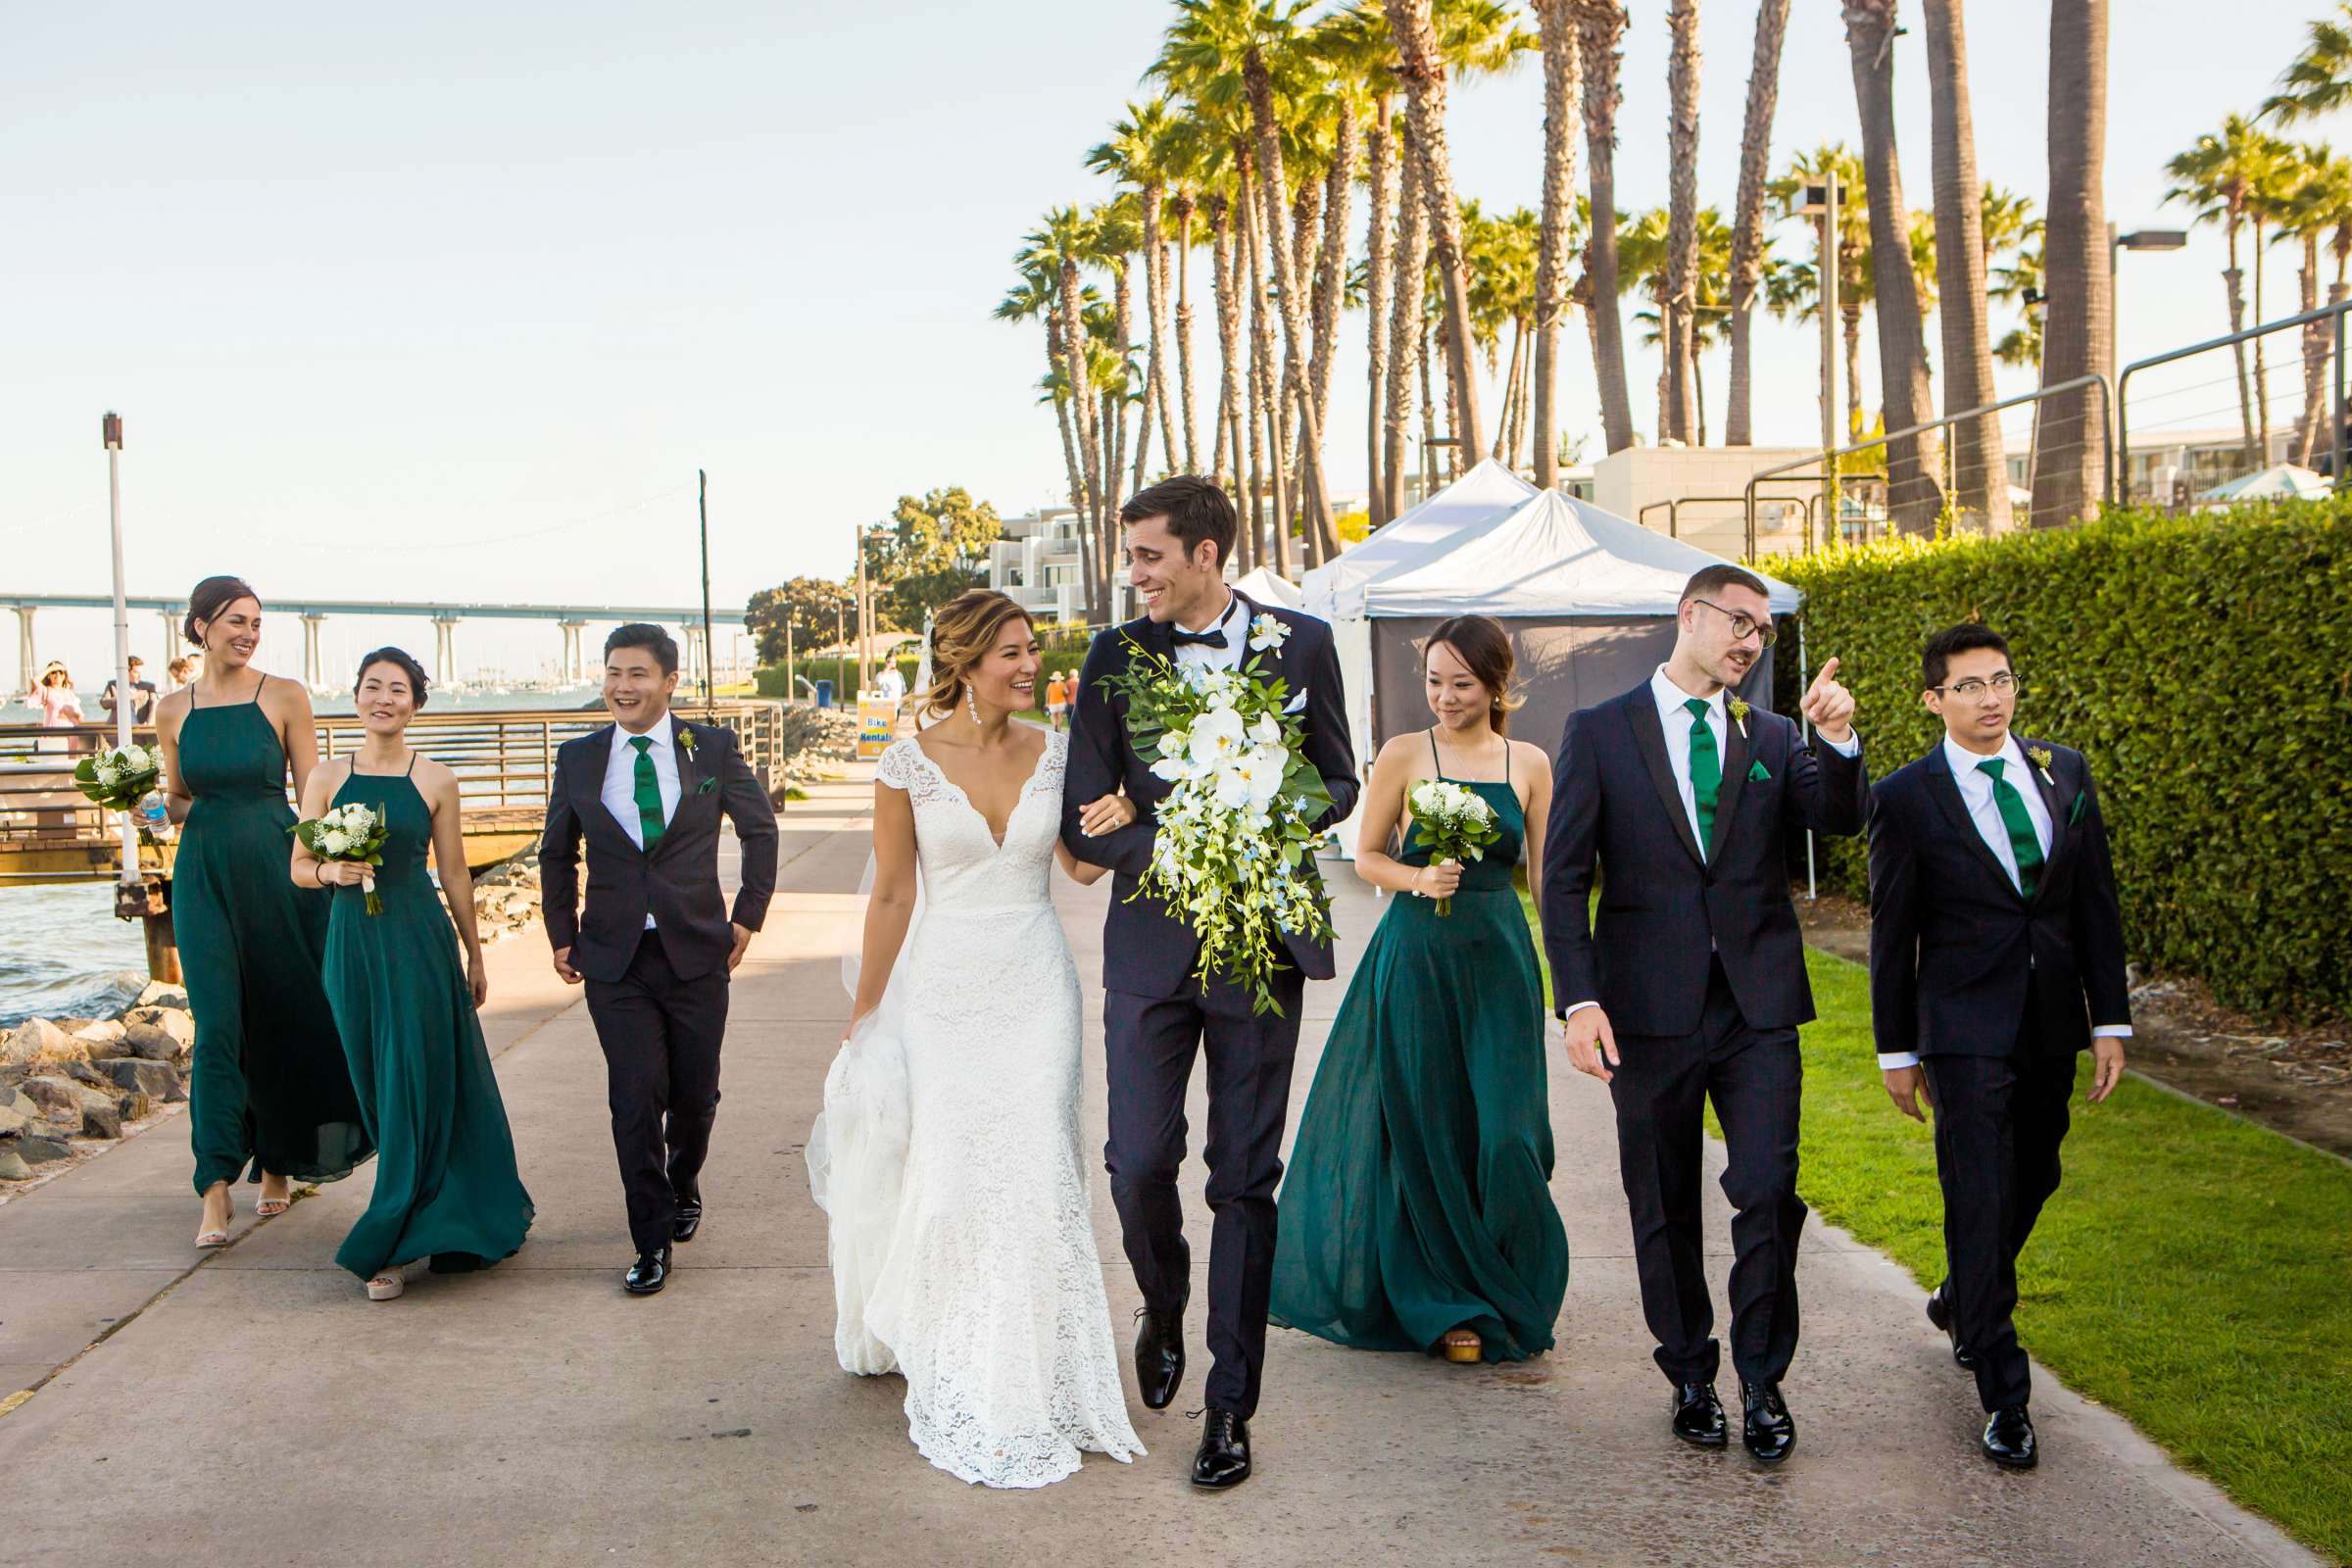 Coronado Island Marriott Resort & Spa Wedding coordinated by April Anderson, Hee won and Bjorn Wedding Photo #8 by True Photography